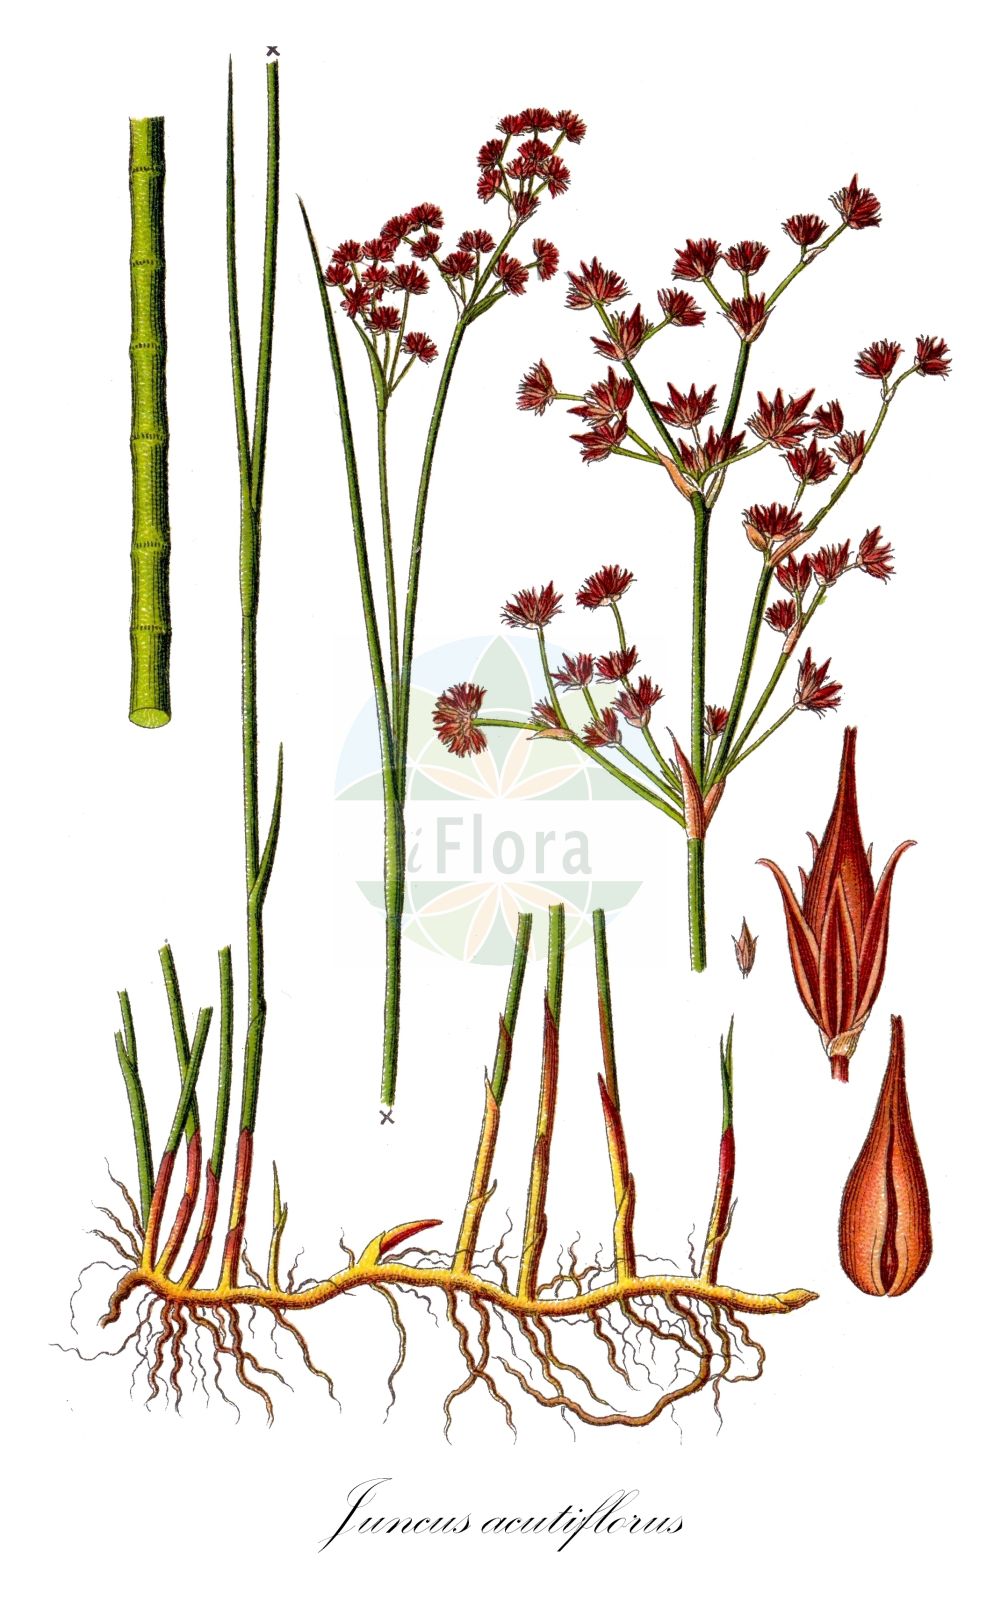 Historische Abbildung von Juncus acutiflorus (Spitzblütige Binse - Sharp-flowered Rush). ---- Historical Drawing of Juncus acutiflorus (Spitzblütige Binse - Sharp-flowered Rush).(Juncus acutiflorus,Spitzblütige Binse,Sharp-flowered Rush,Juncus acutiflorus,Juncus brevirostris,Juncus foliosus,Juncus sylvaticus,Phylloschoenus acutiflorus,Spitzbluetige Binse,Spitzbluetige Simse,Sharp-flowered Rush,Sharpflower Rush,Juncus,Binse,Rush,Juncaceae,Binsengewächse,Rush family,Sturm (1796f))